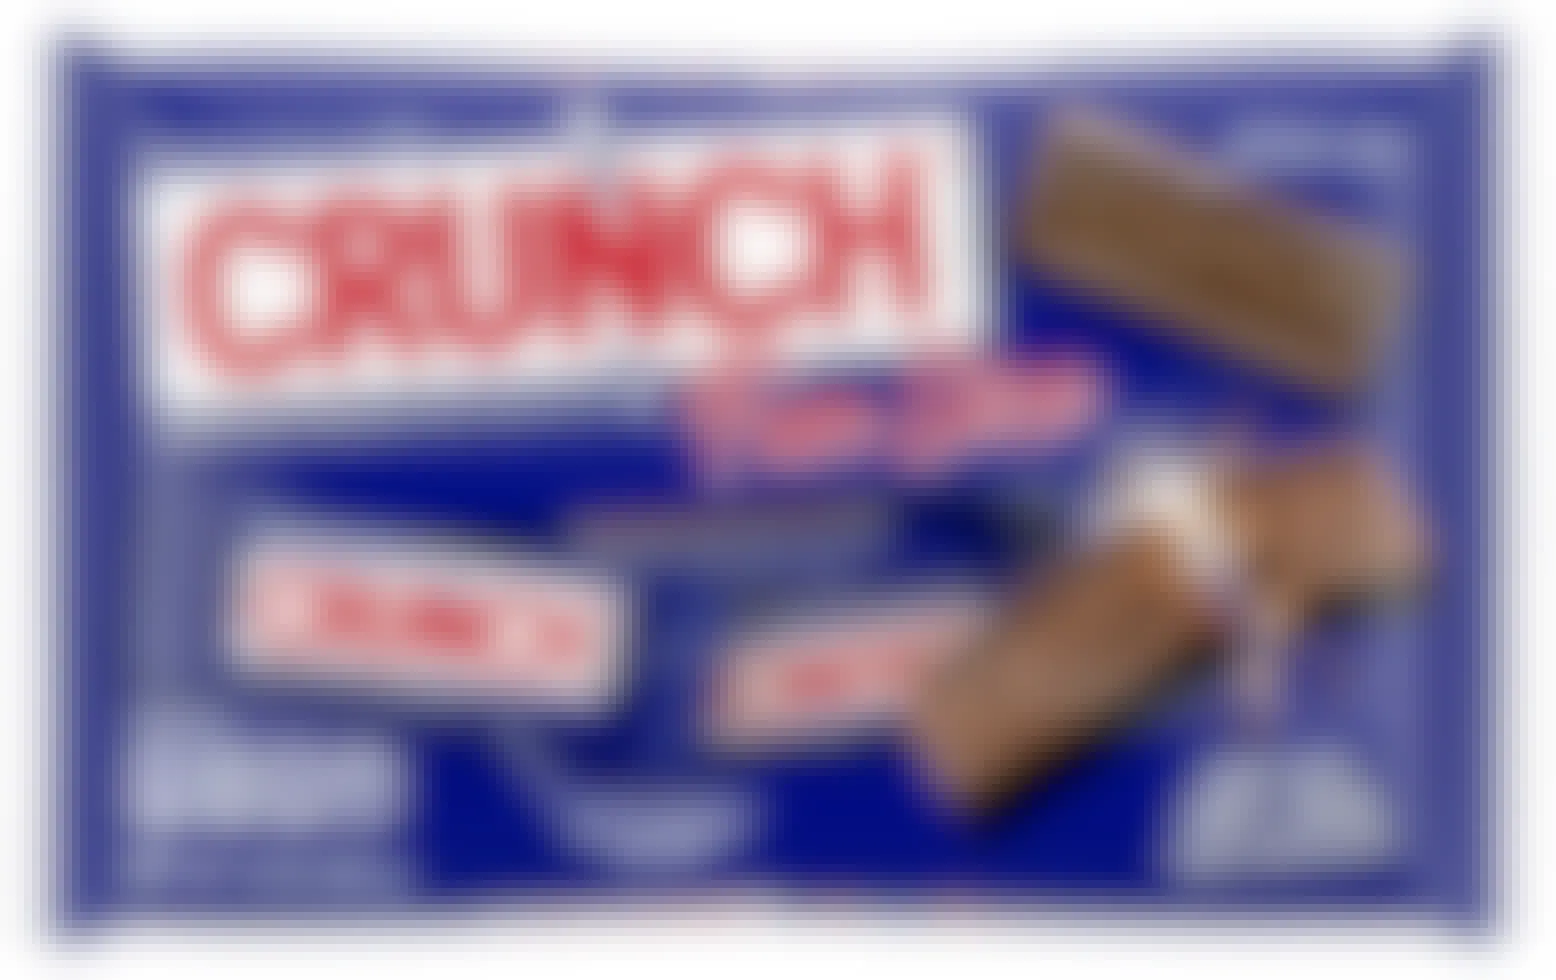 Crunch fun size candy bag